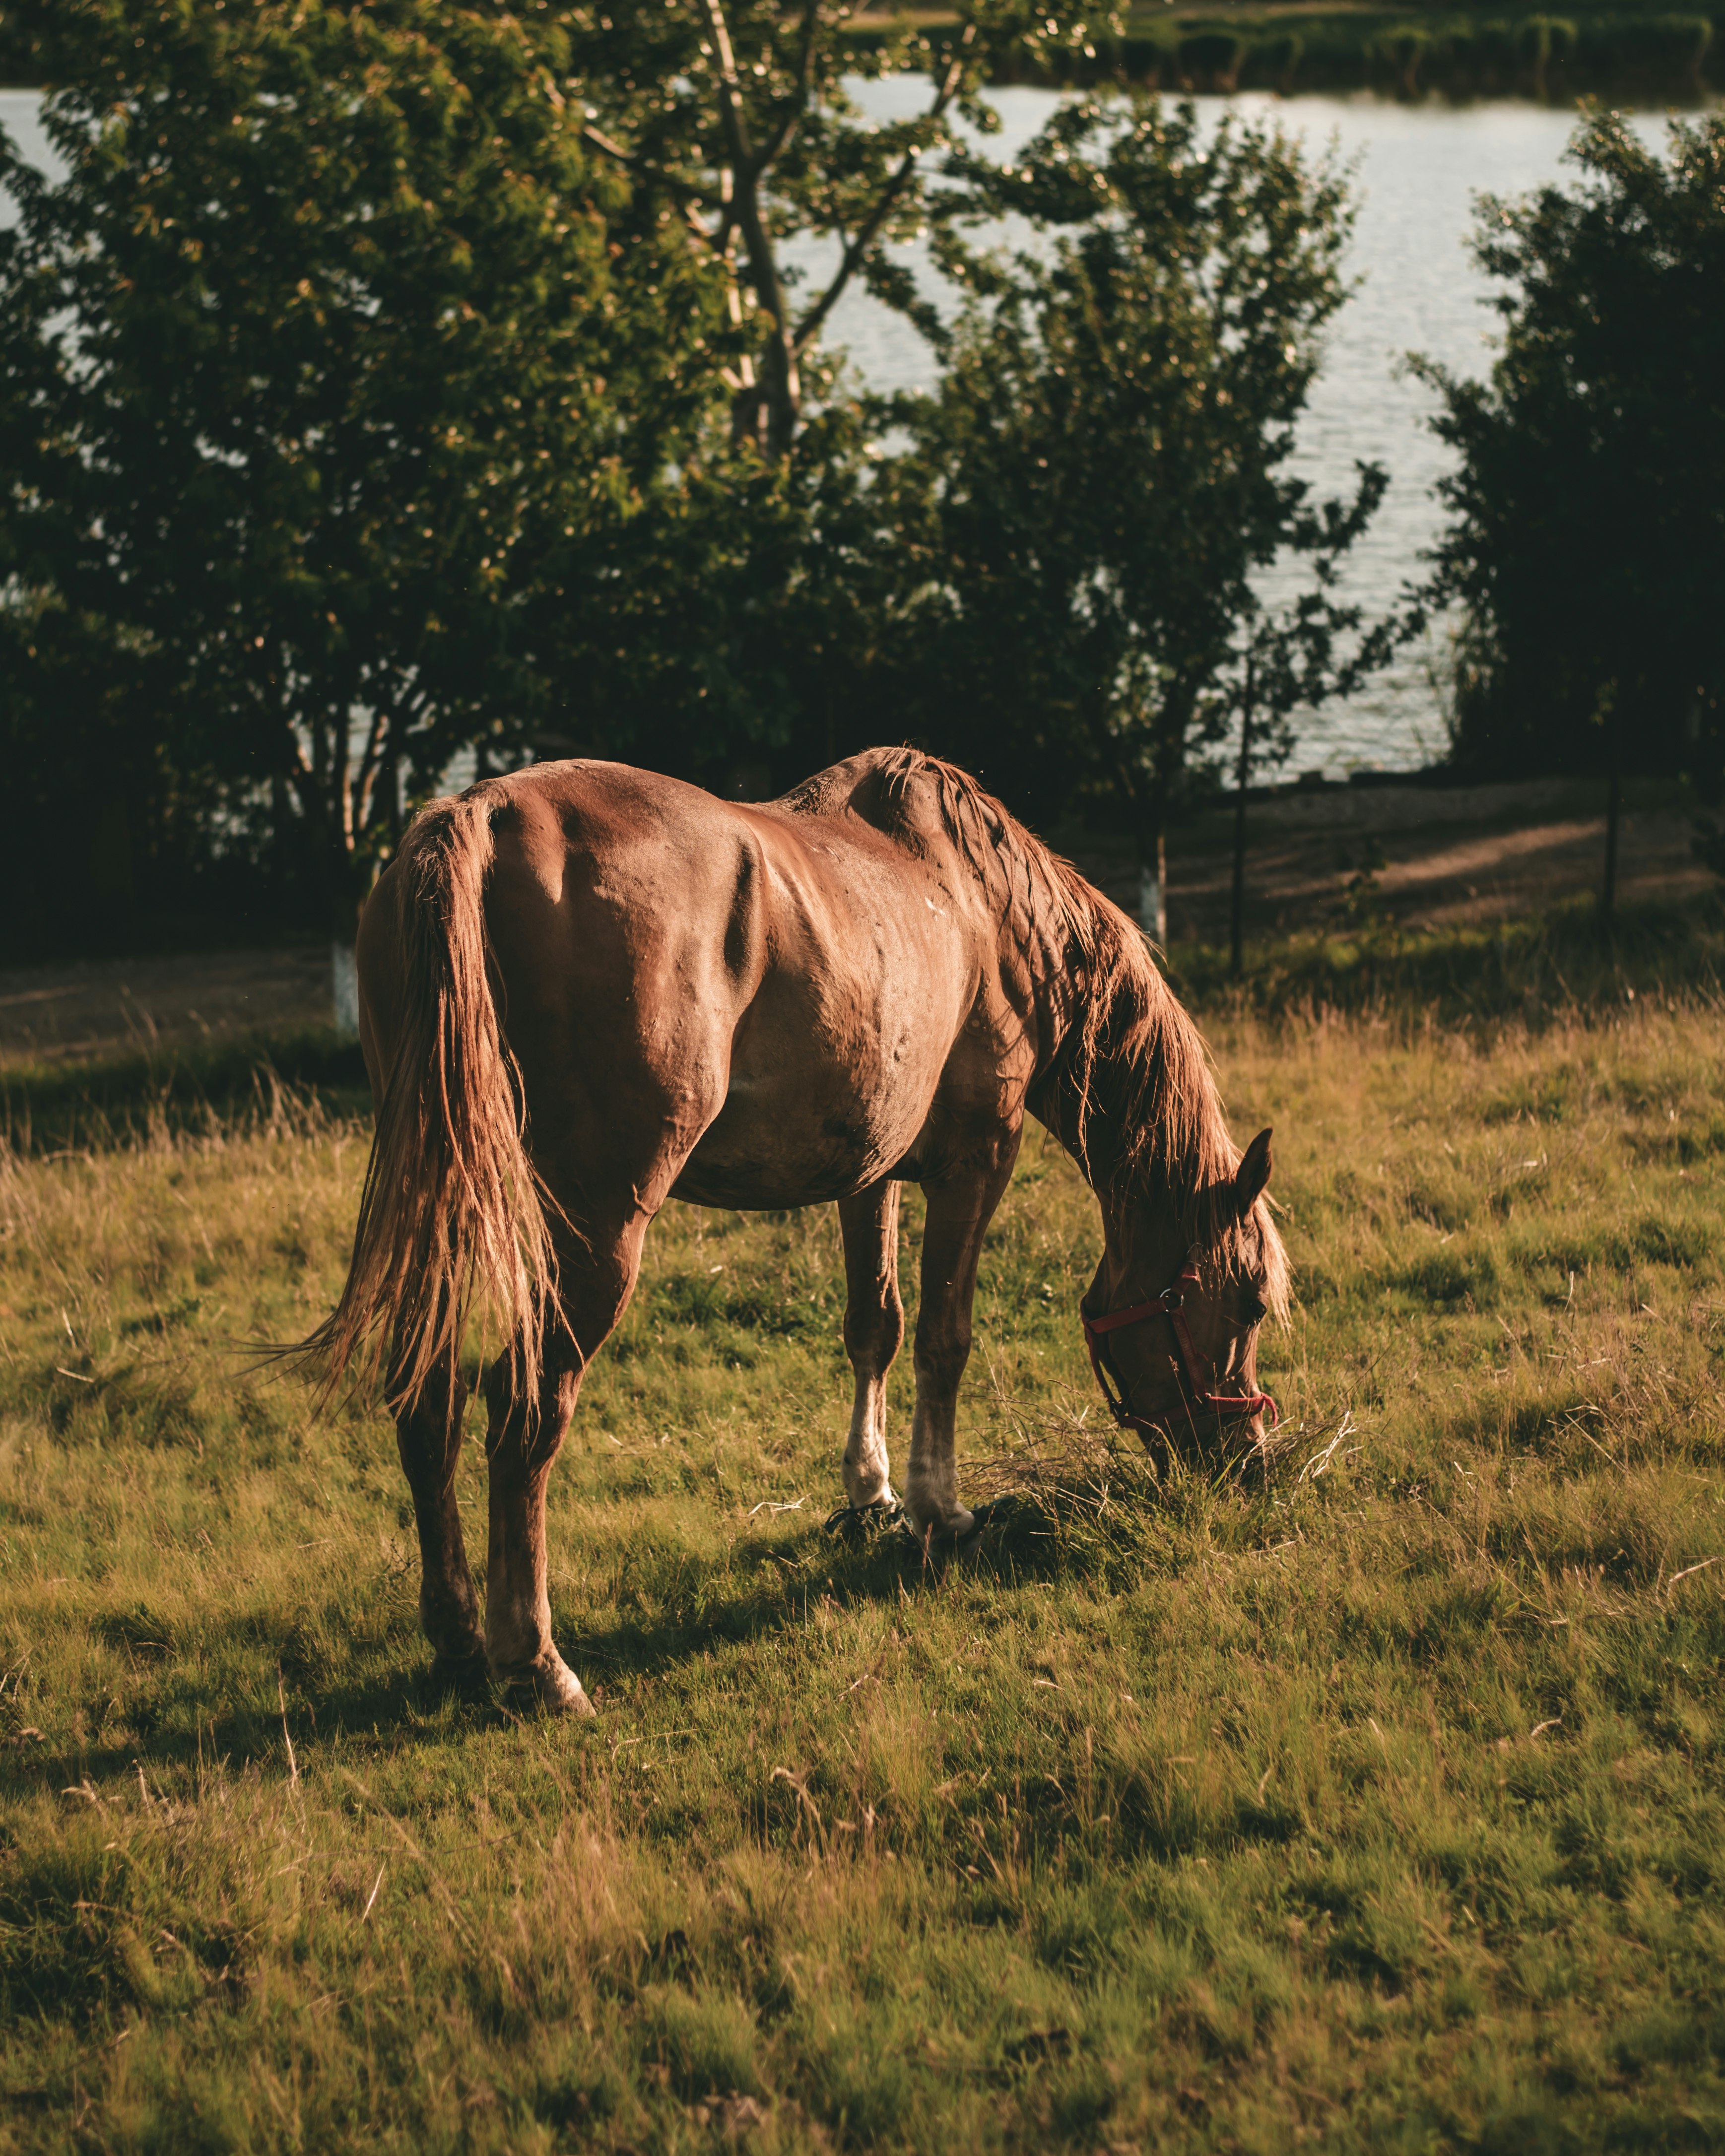 brown horse eating grass on grass field